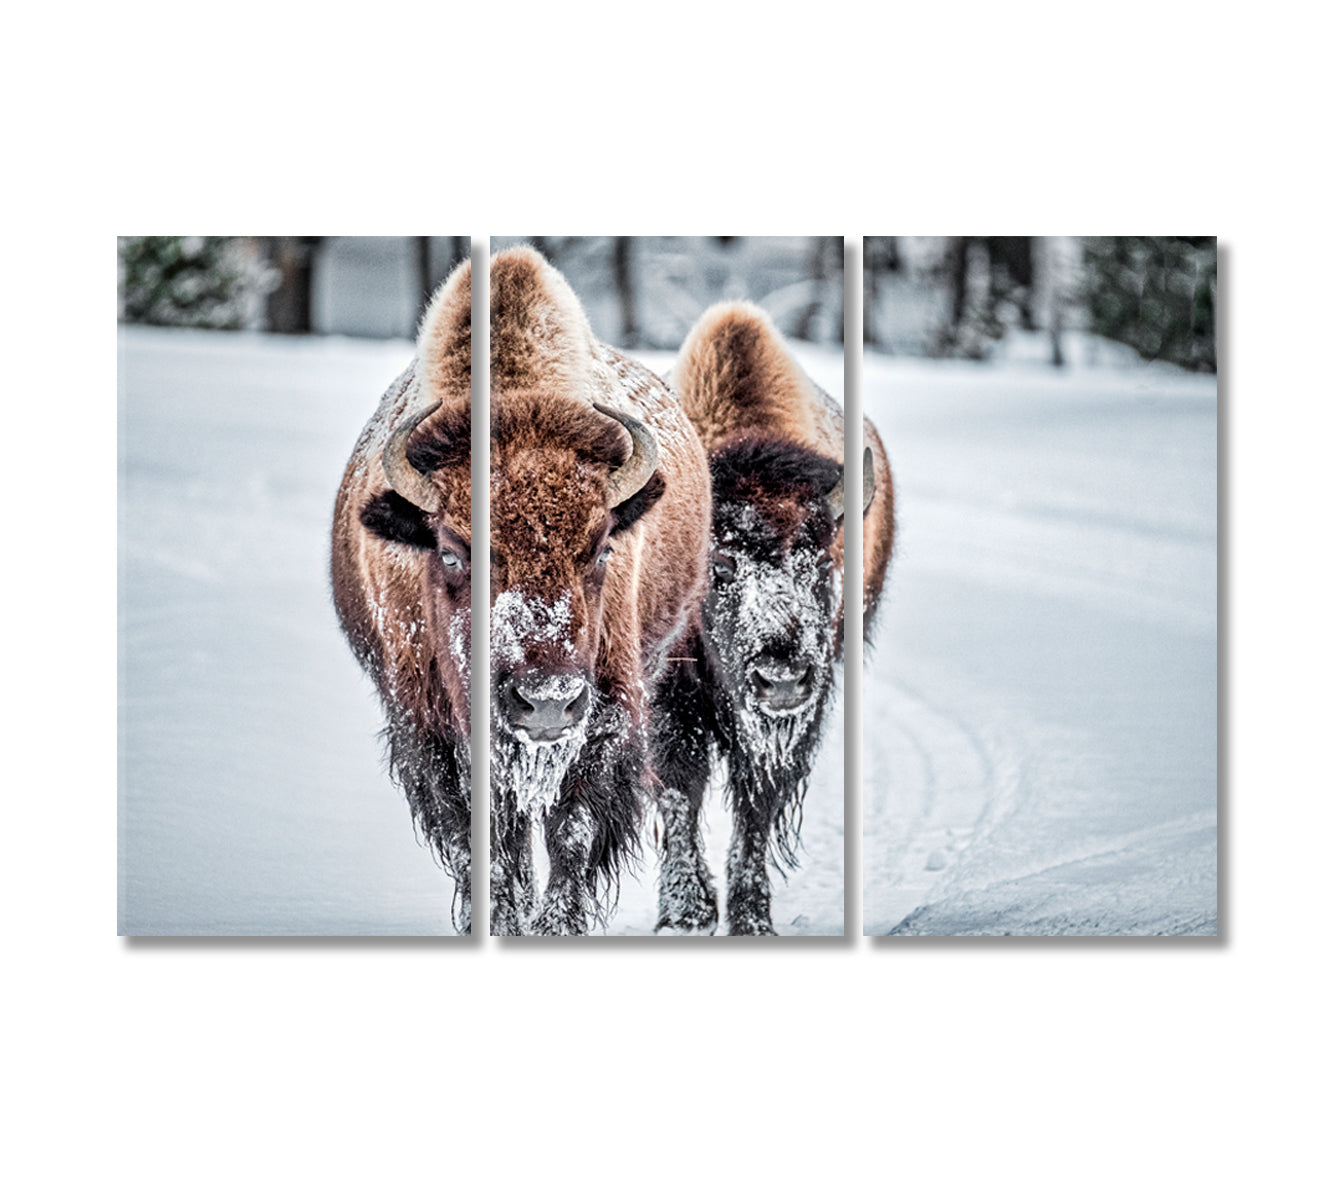 Bison in Winter Print Canvas Art-Canvas Print-CetArt-3 Panels-36x24 inches-CetArt